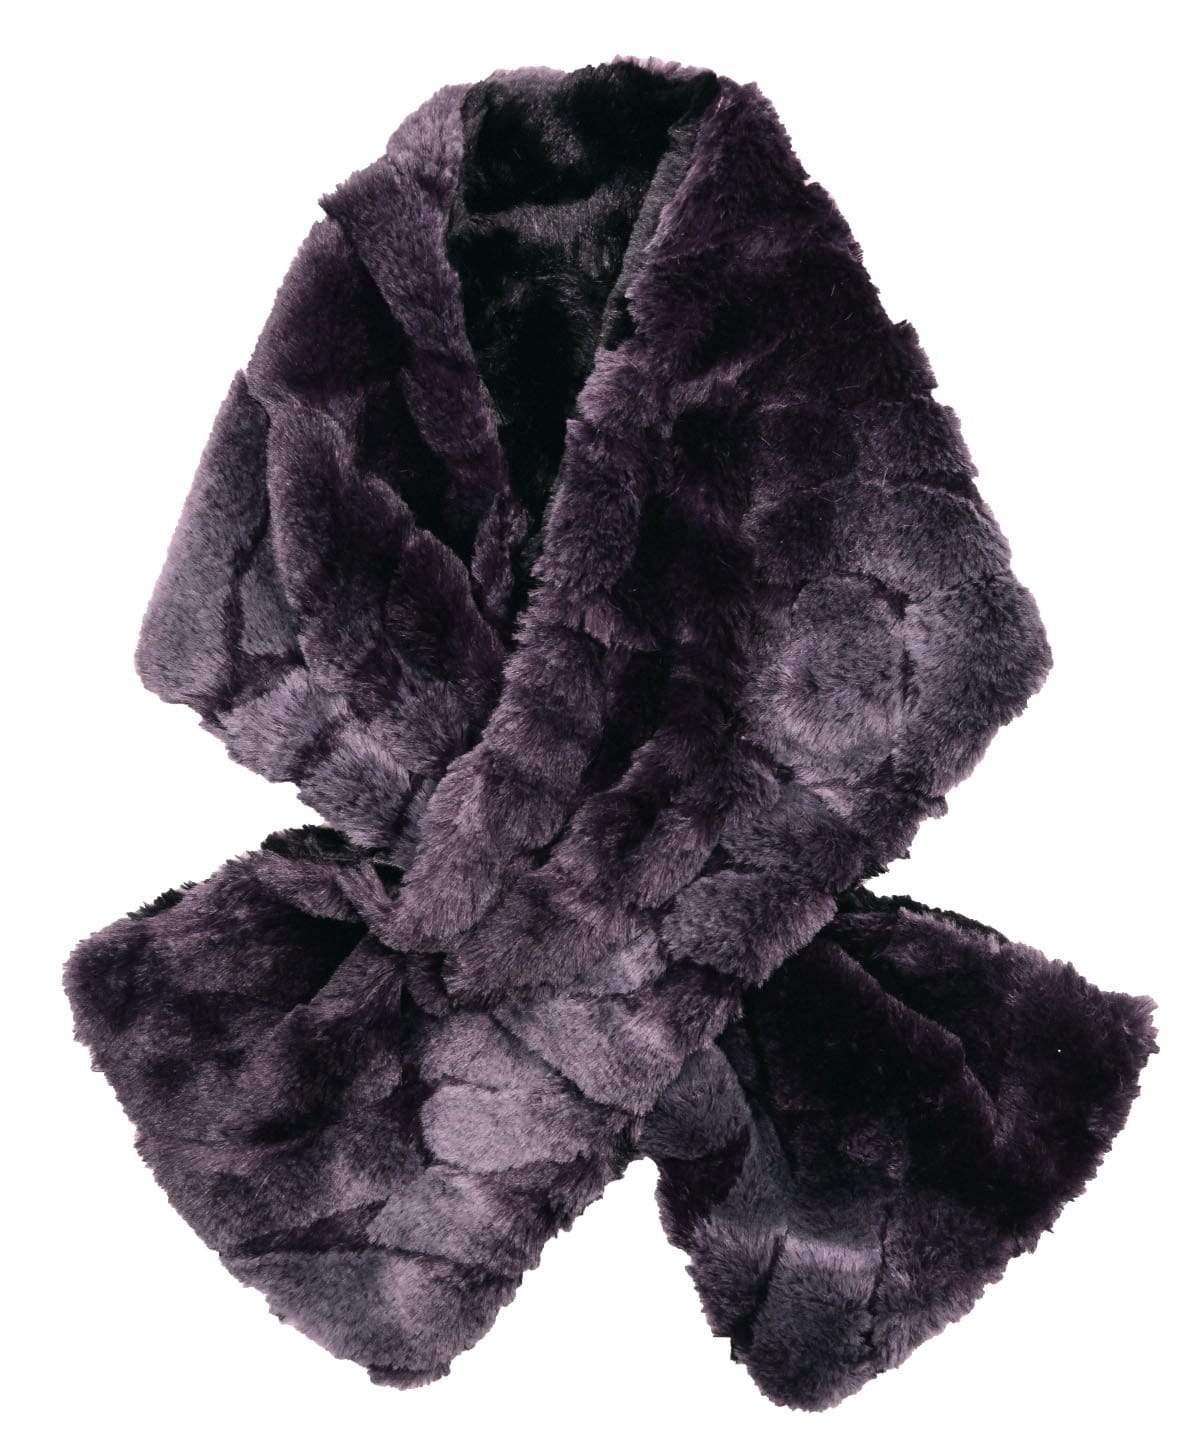 Pull-Thru Scarf - Luxury Faux Fur in Aubergine Dream (Only One Left!)